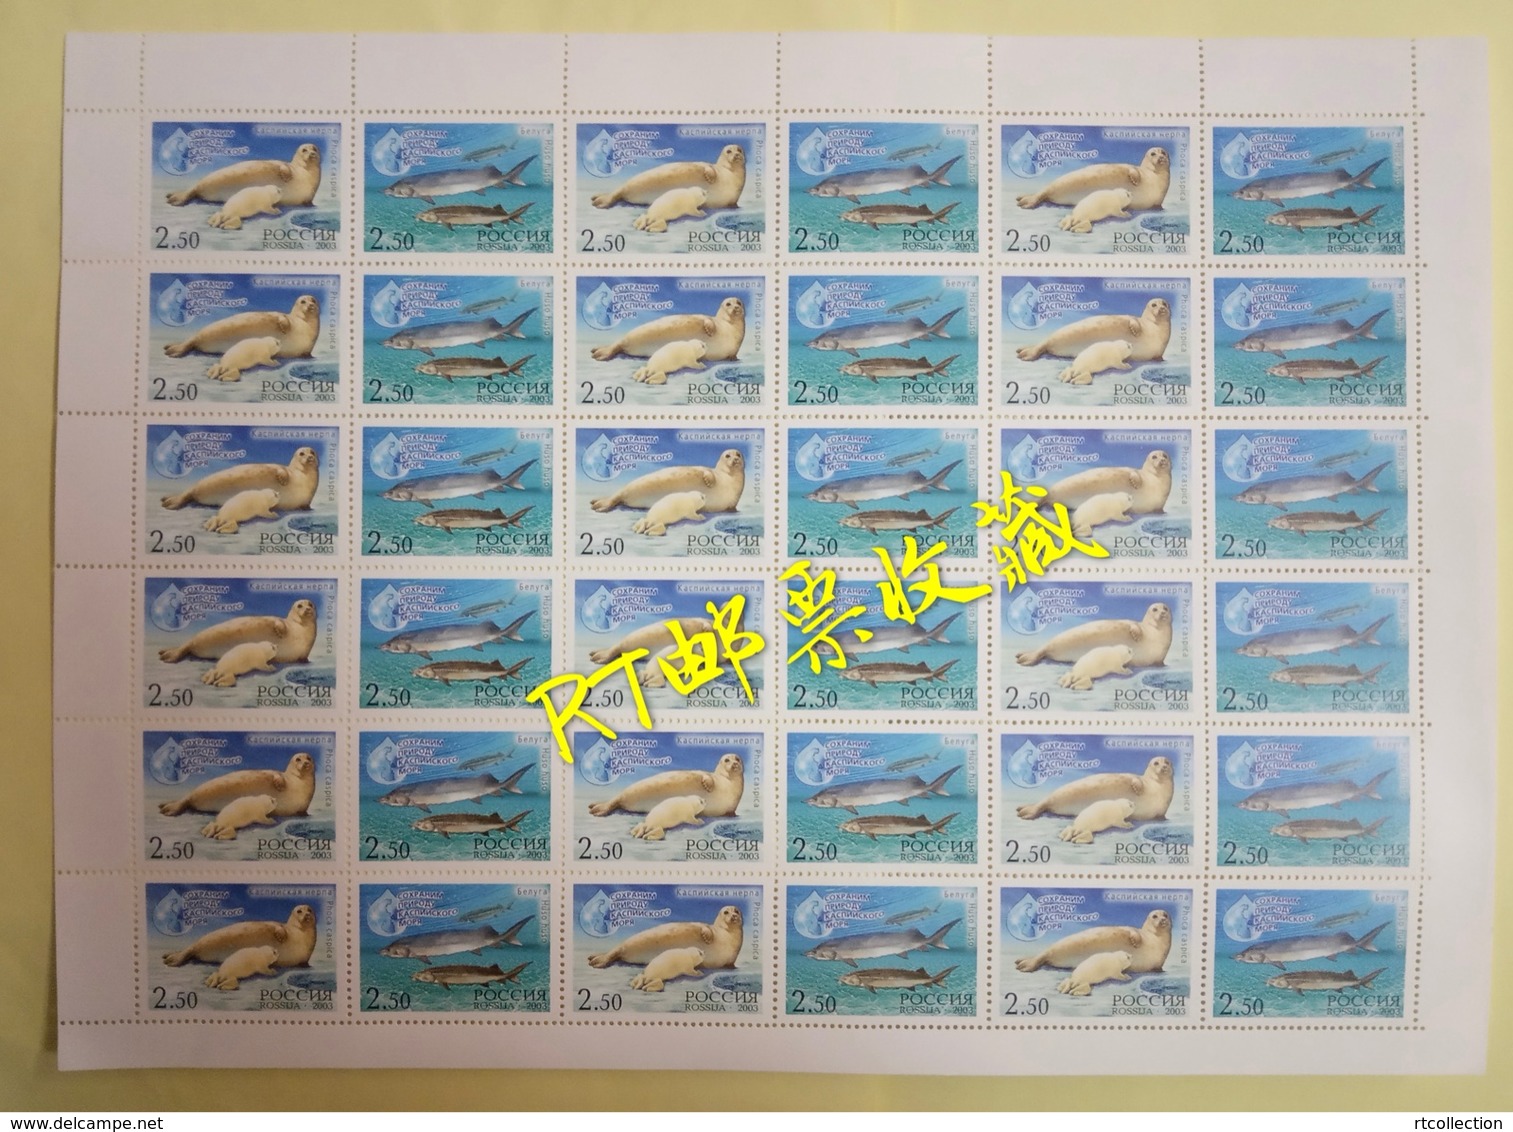 Russia 2003 Sheet Joint Issue Caspian Sea Marine Life Fauna Beluga Fish Seal Dog Animals Nature Stamps MNH Mi 1118-1119 - Hojas Completas